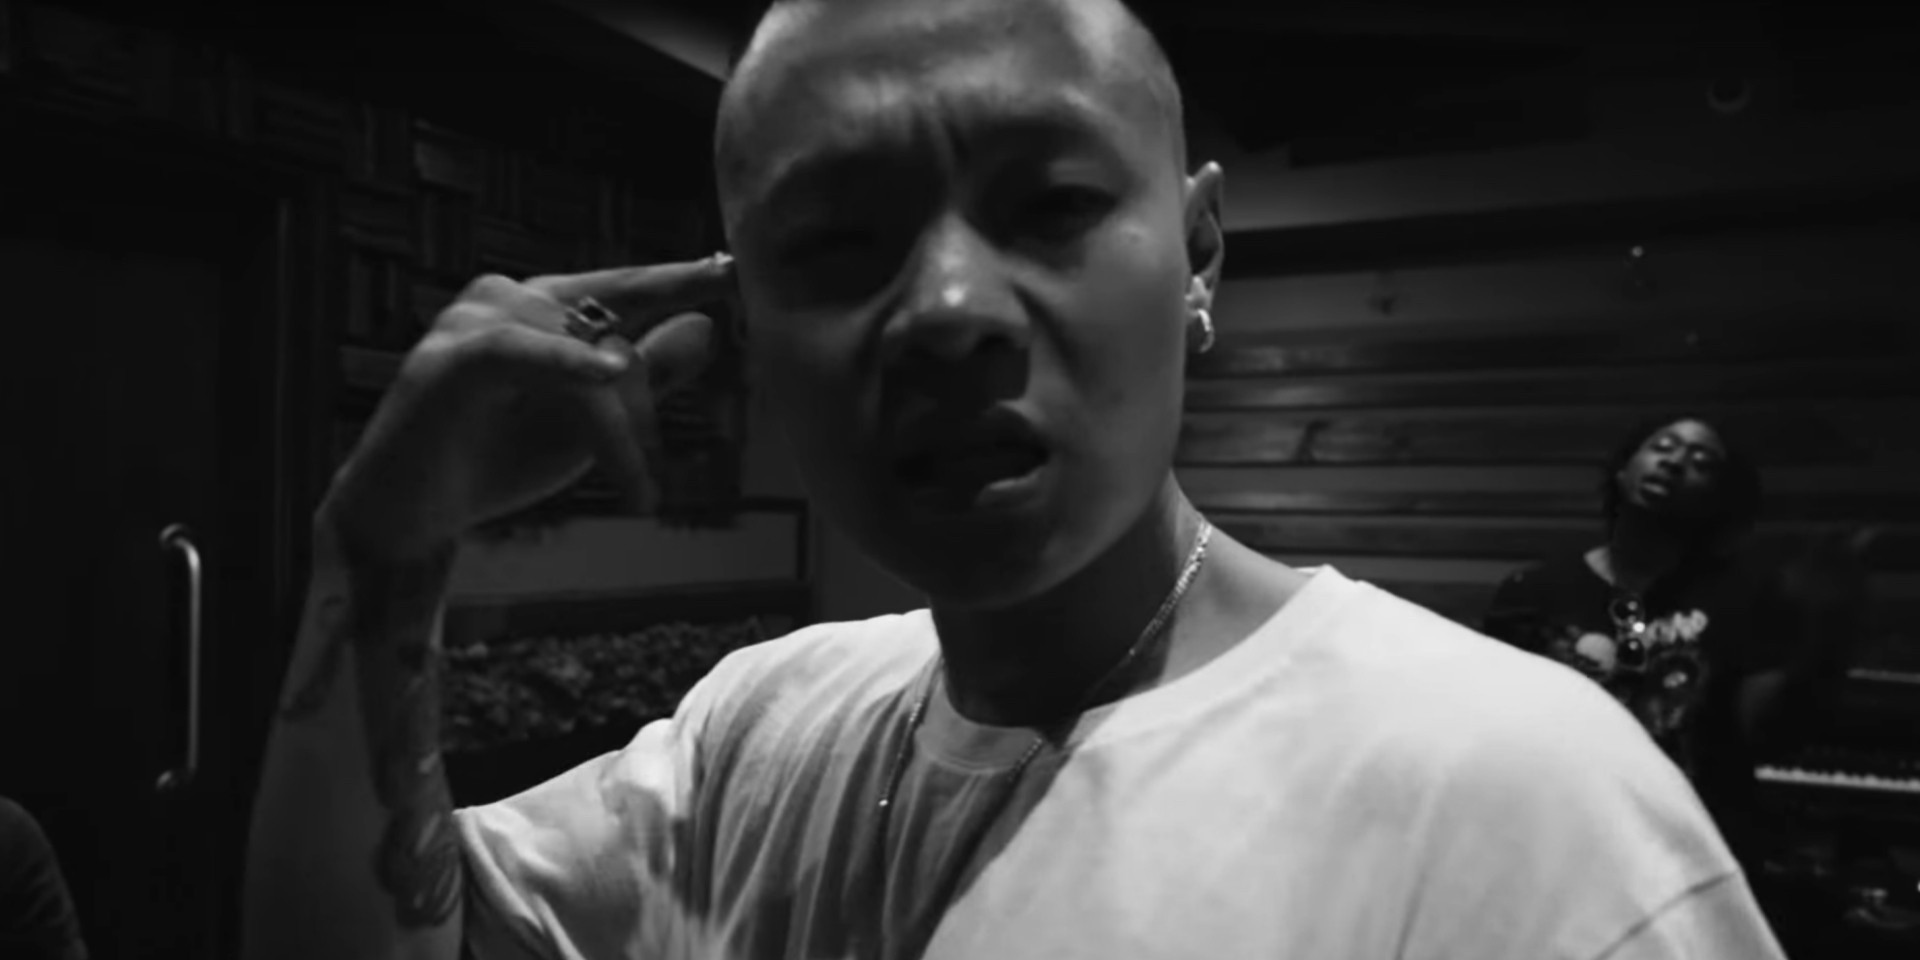 Bohan Phoenix celebrates the grind in 'IUNNO' music video - watch